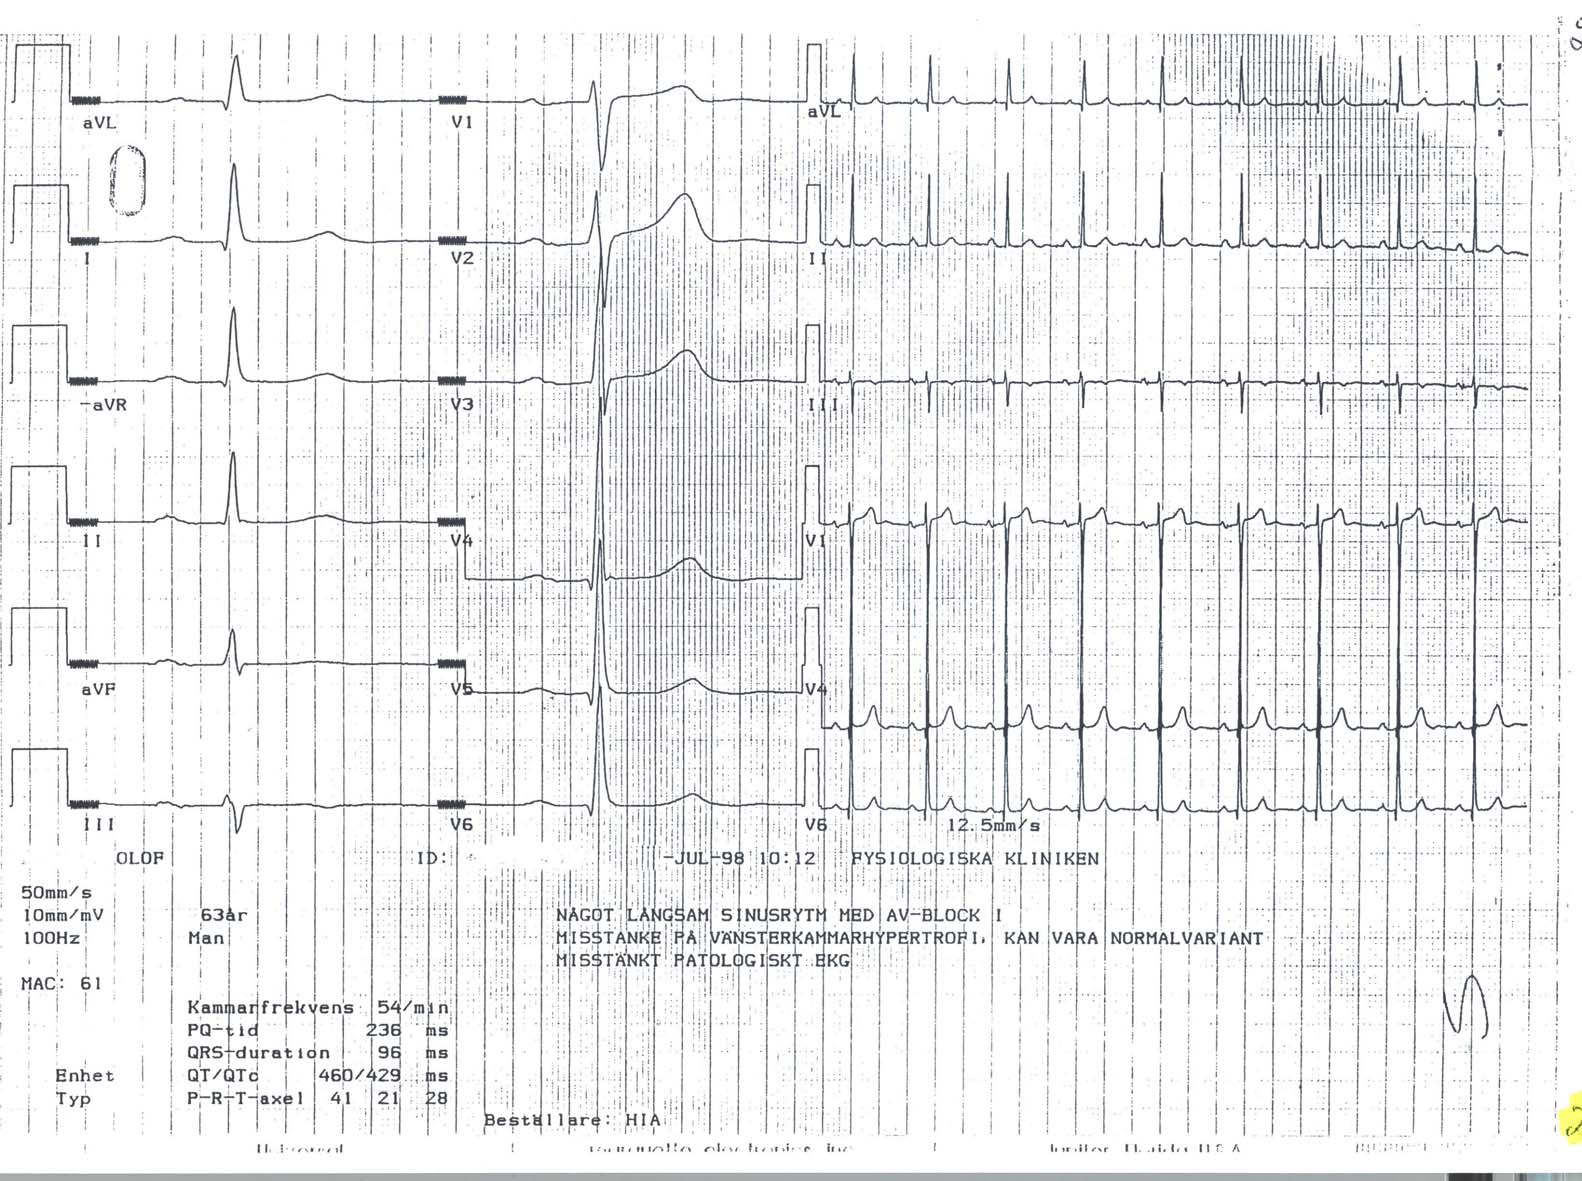 EKG 22 EKG nr 22 Sinusrytm med AV-block I och HR 54.